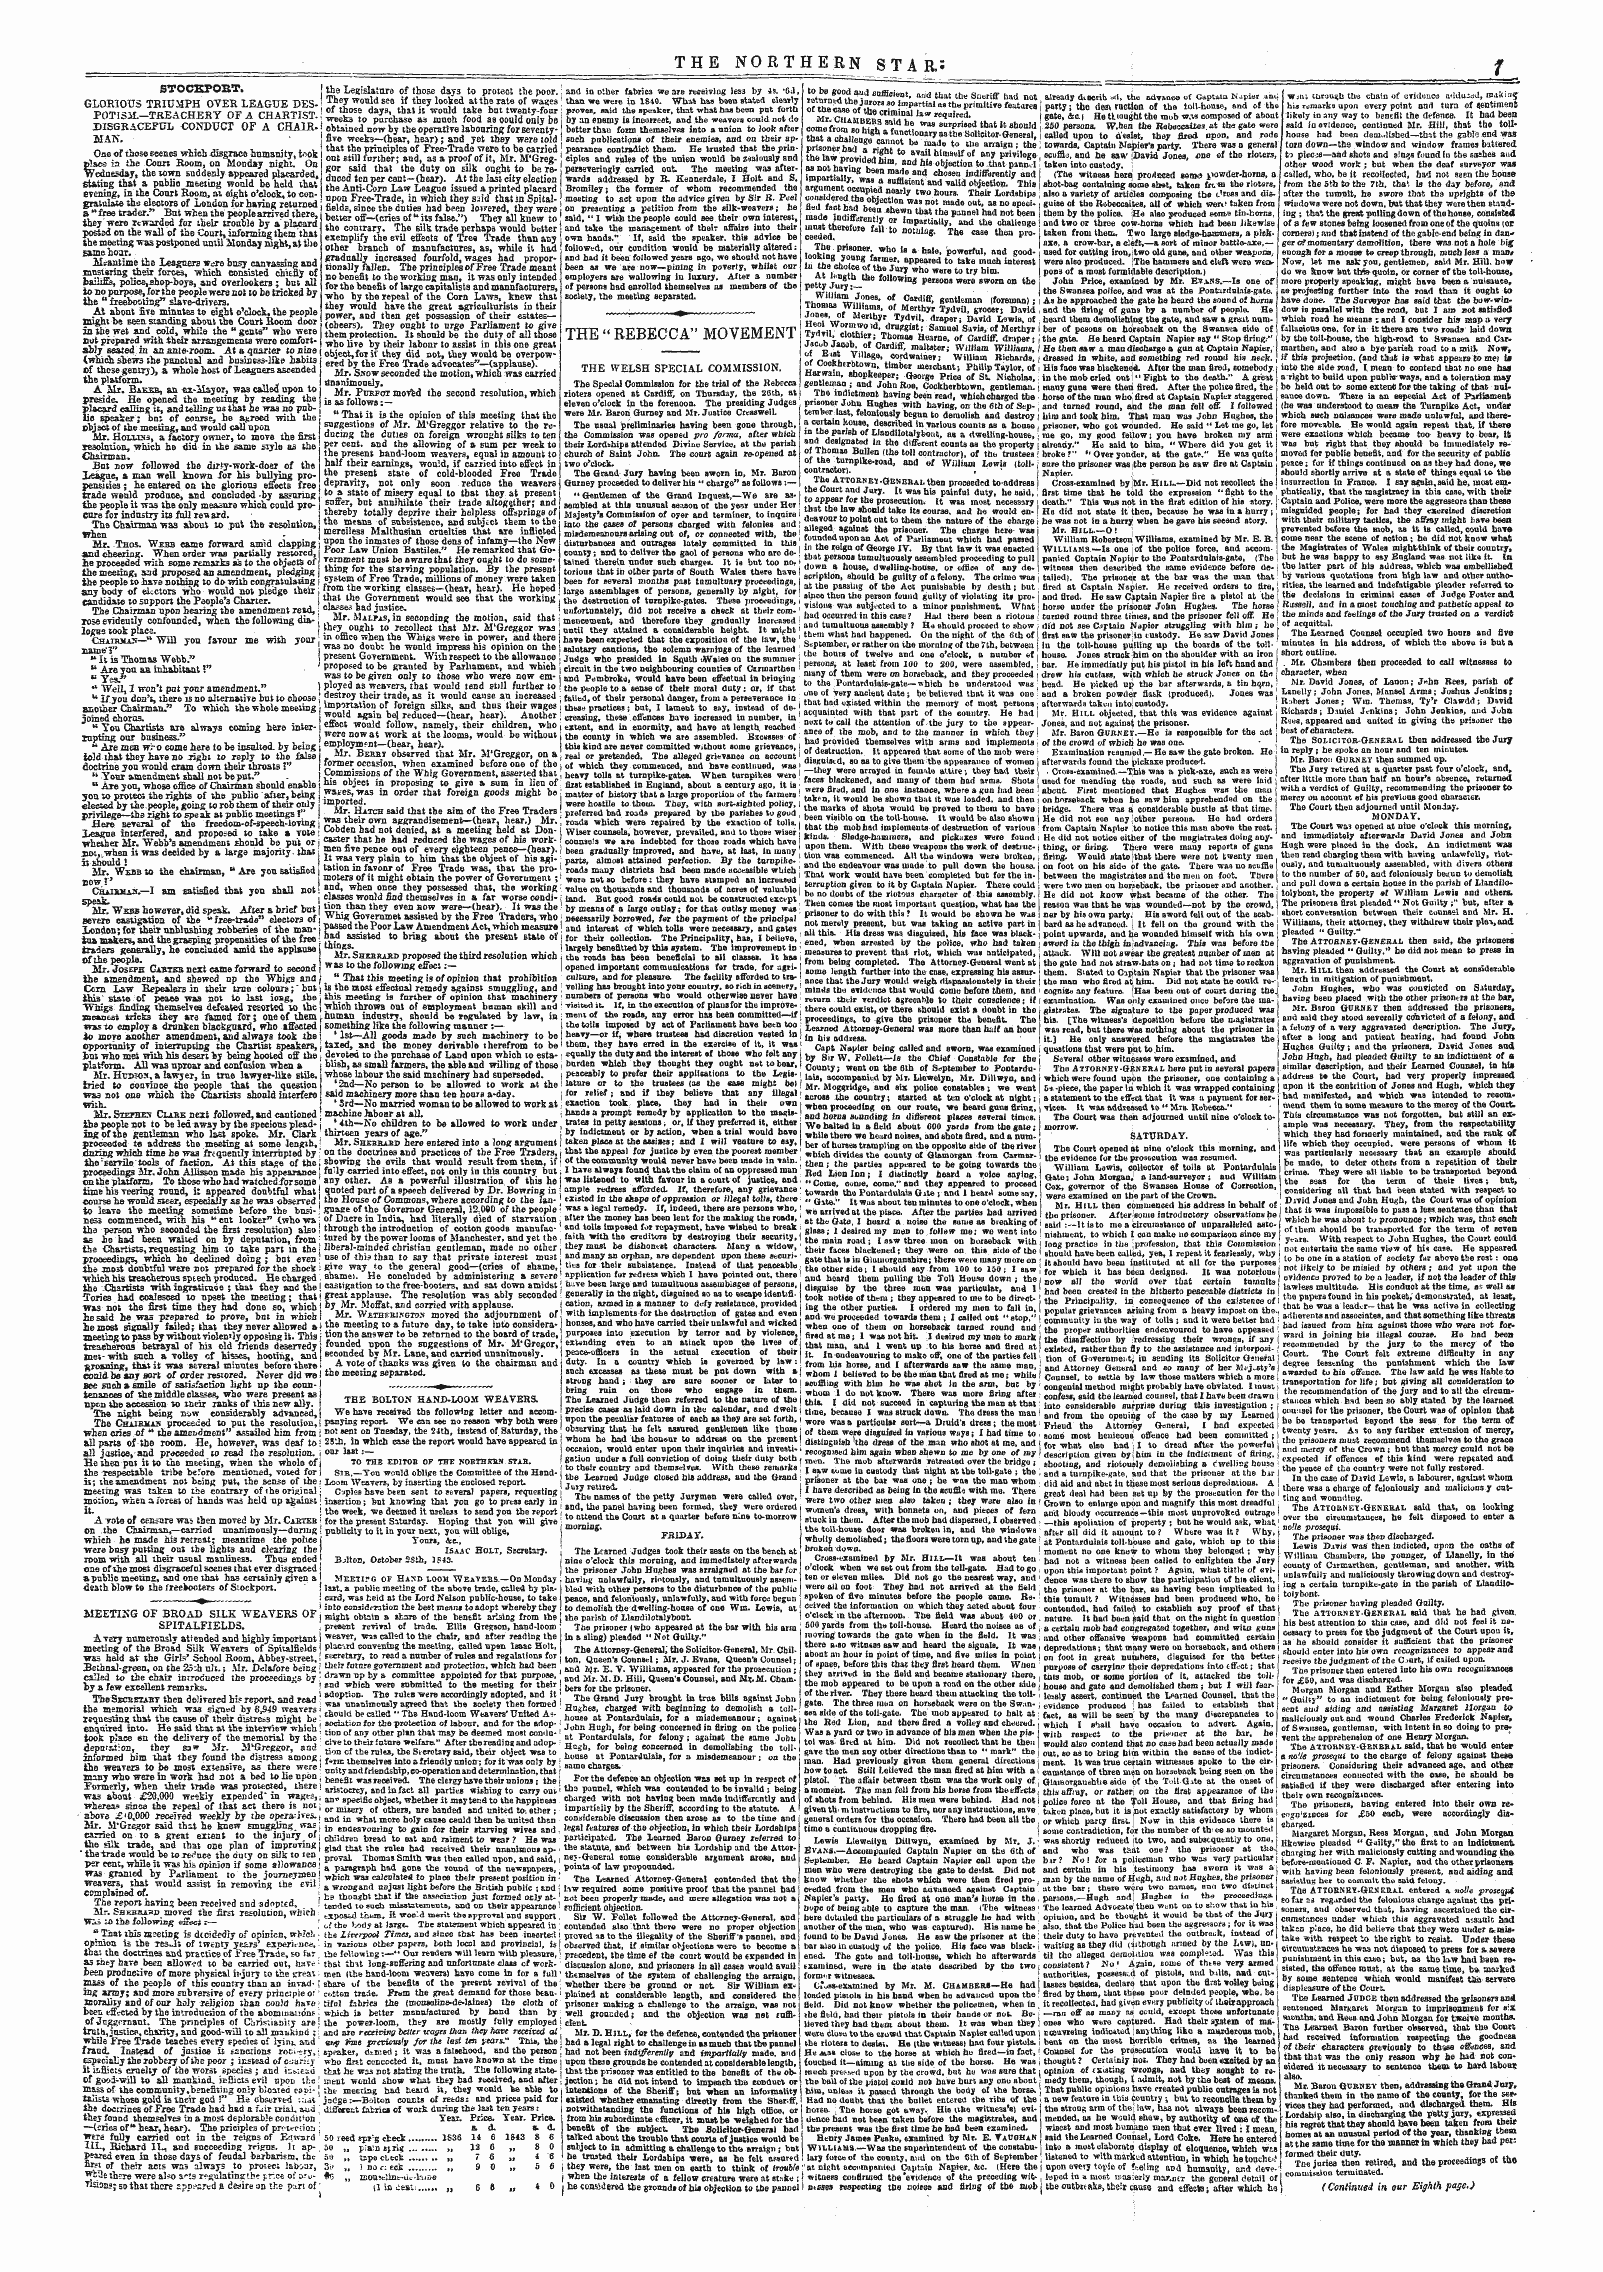 Northern Star (1837-1852): jS F Y, 6th edition: 7